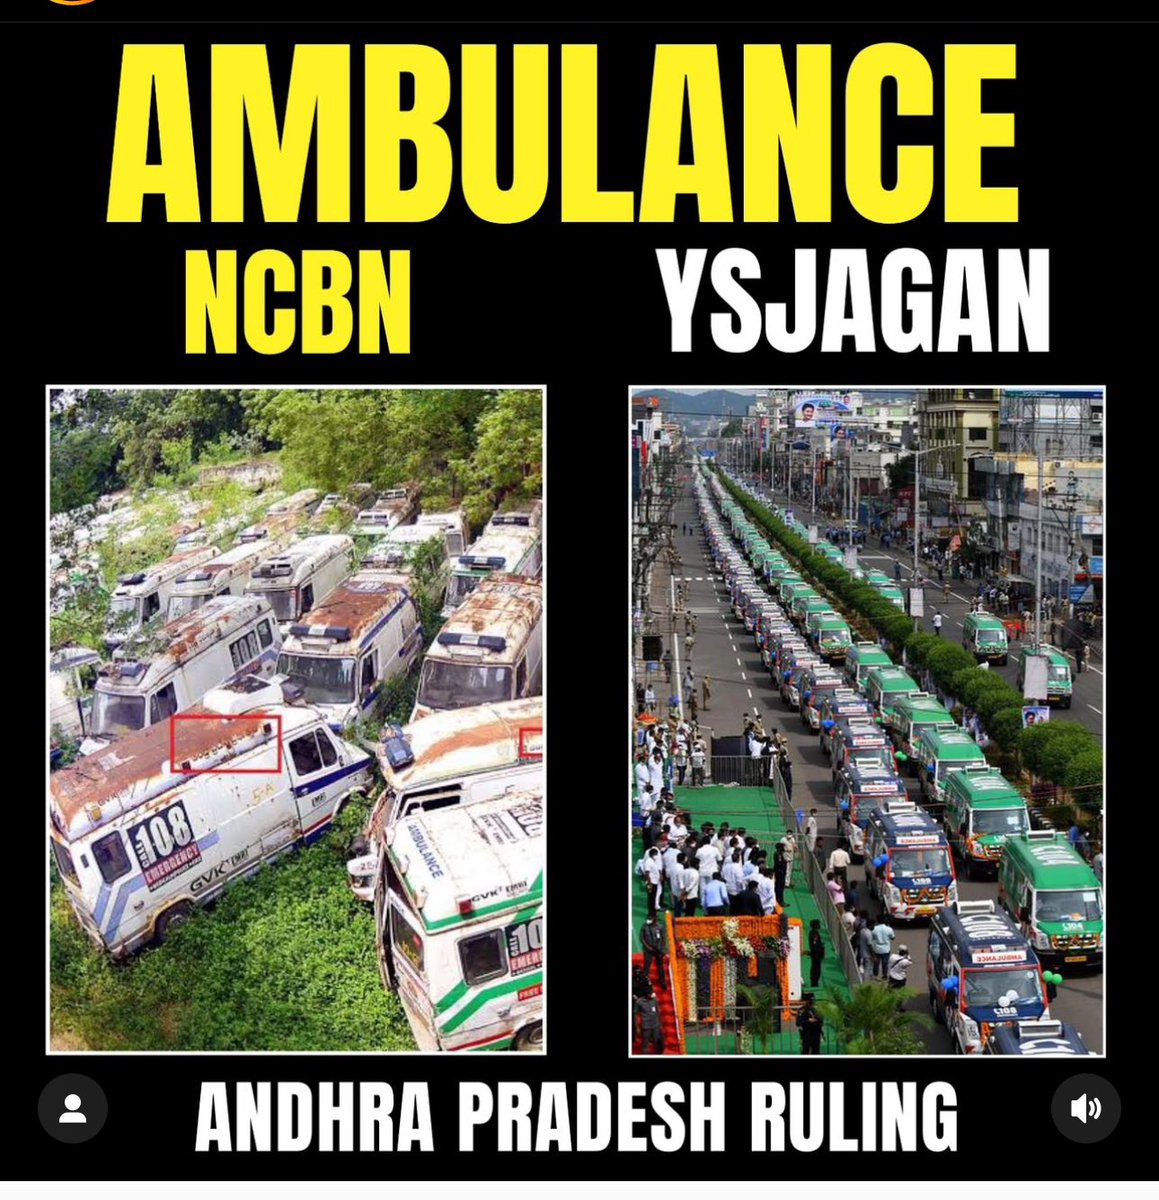 2014-2019                            2019-2024

#AndhraPradesh #Healthcareforall 
#YSJagan